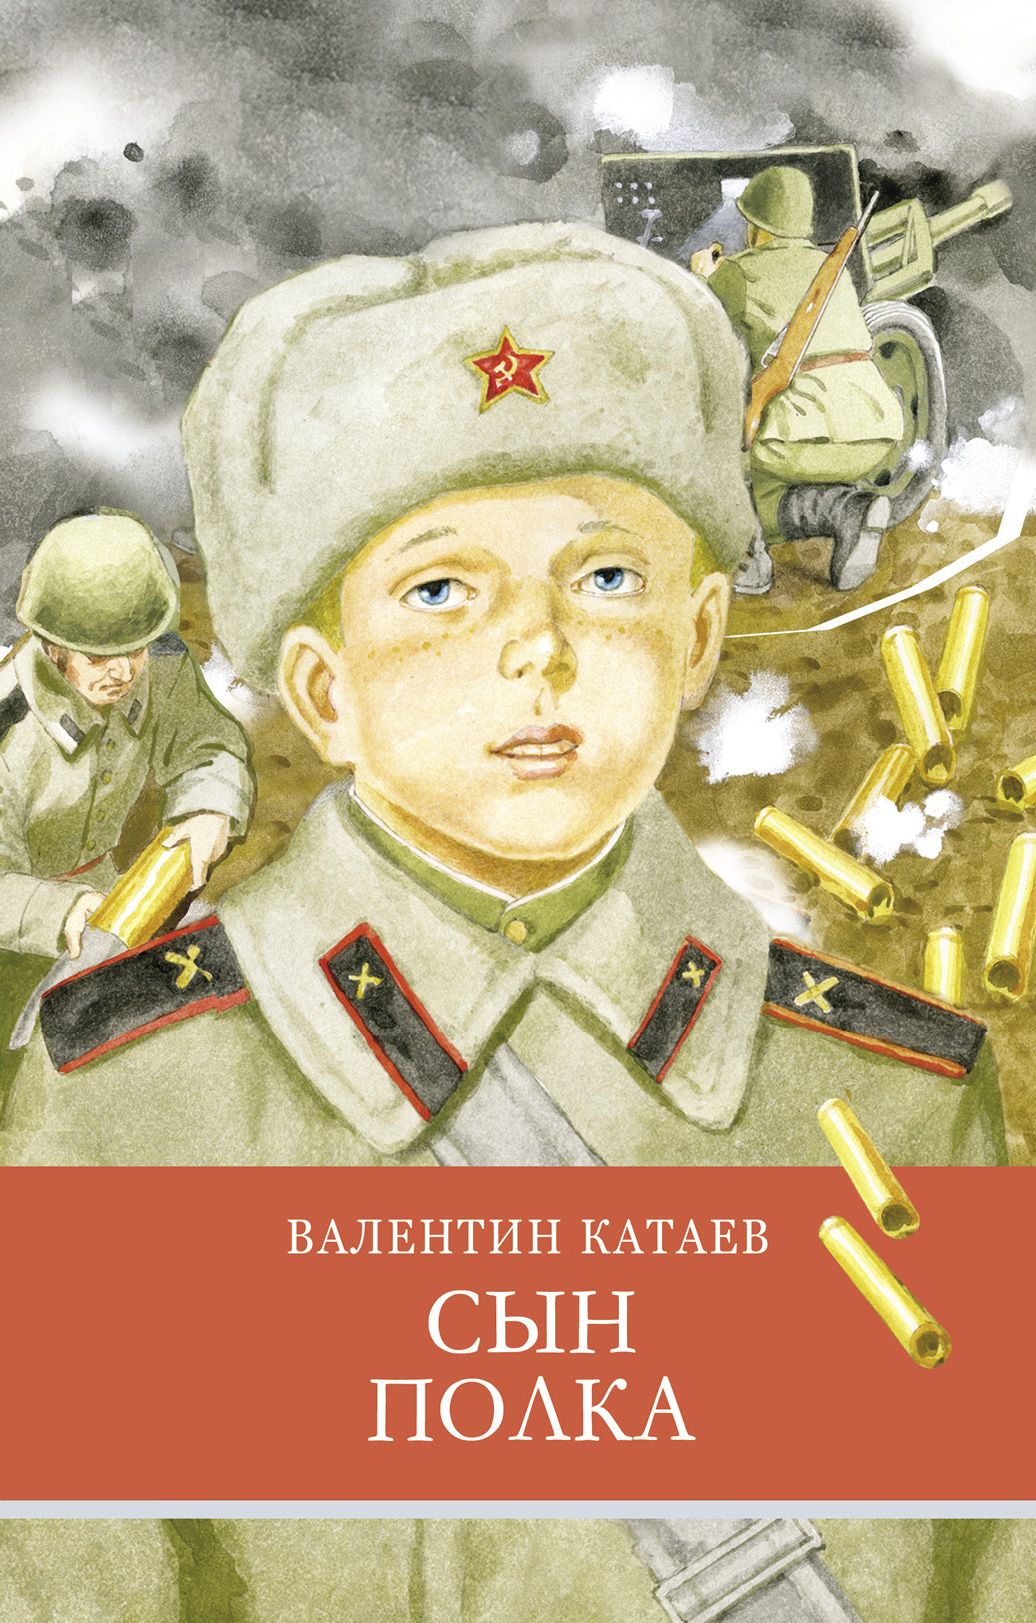 Сын полка обложка. В. Катаев "сын полка". Книга Катаева сын полка.